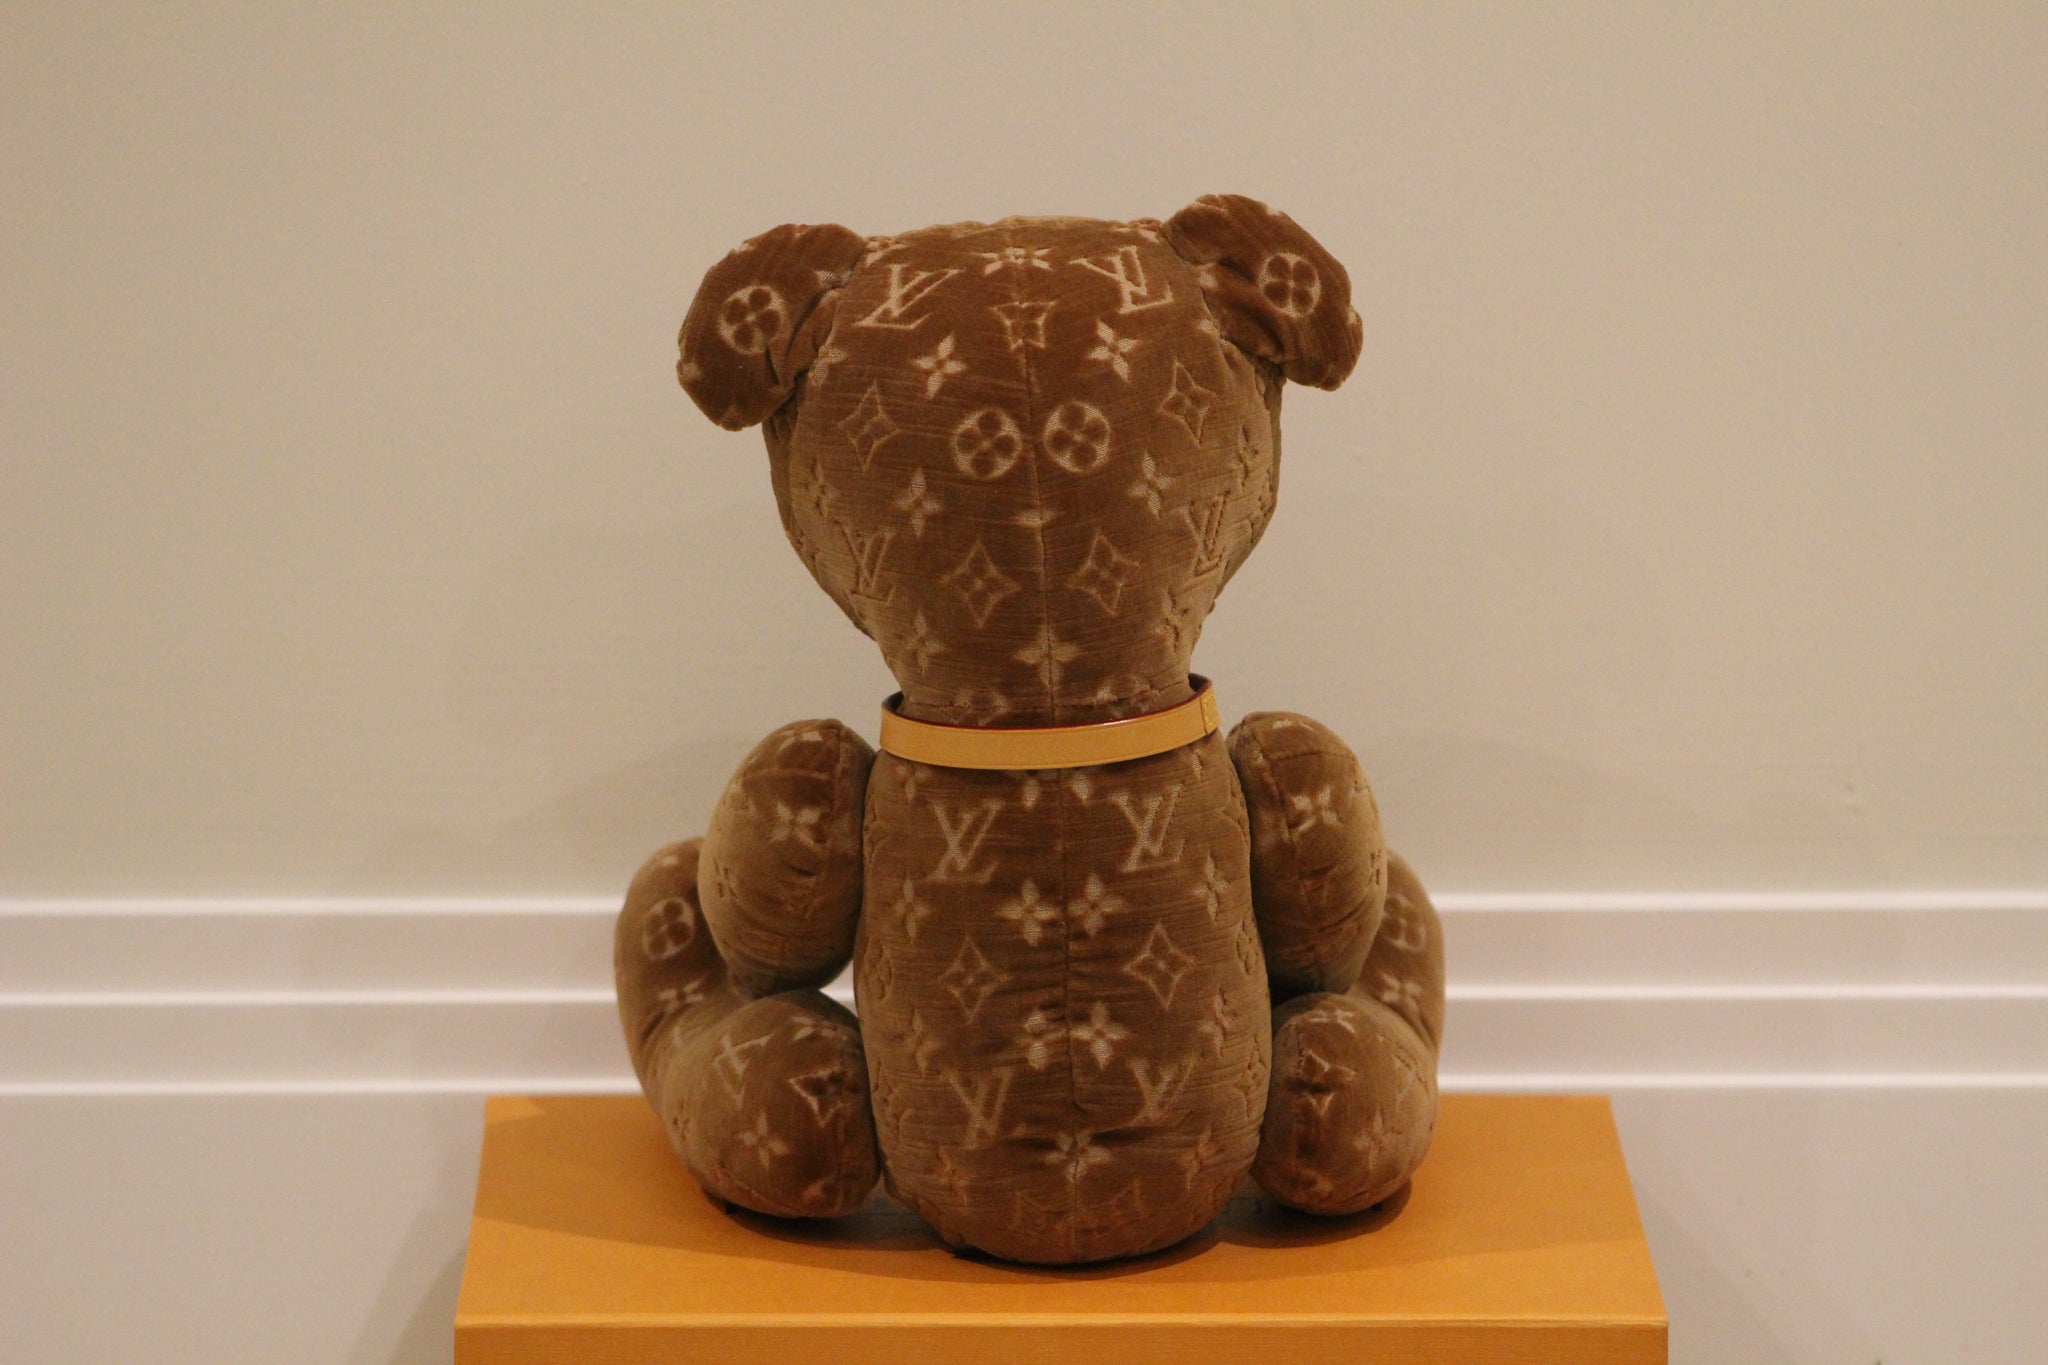 Louis Vuitton Monogram Doudou Teddy Bear Limited Edition 2017